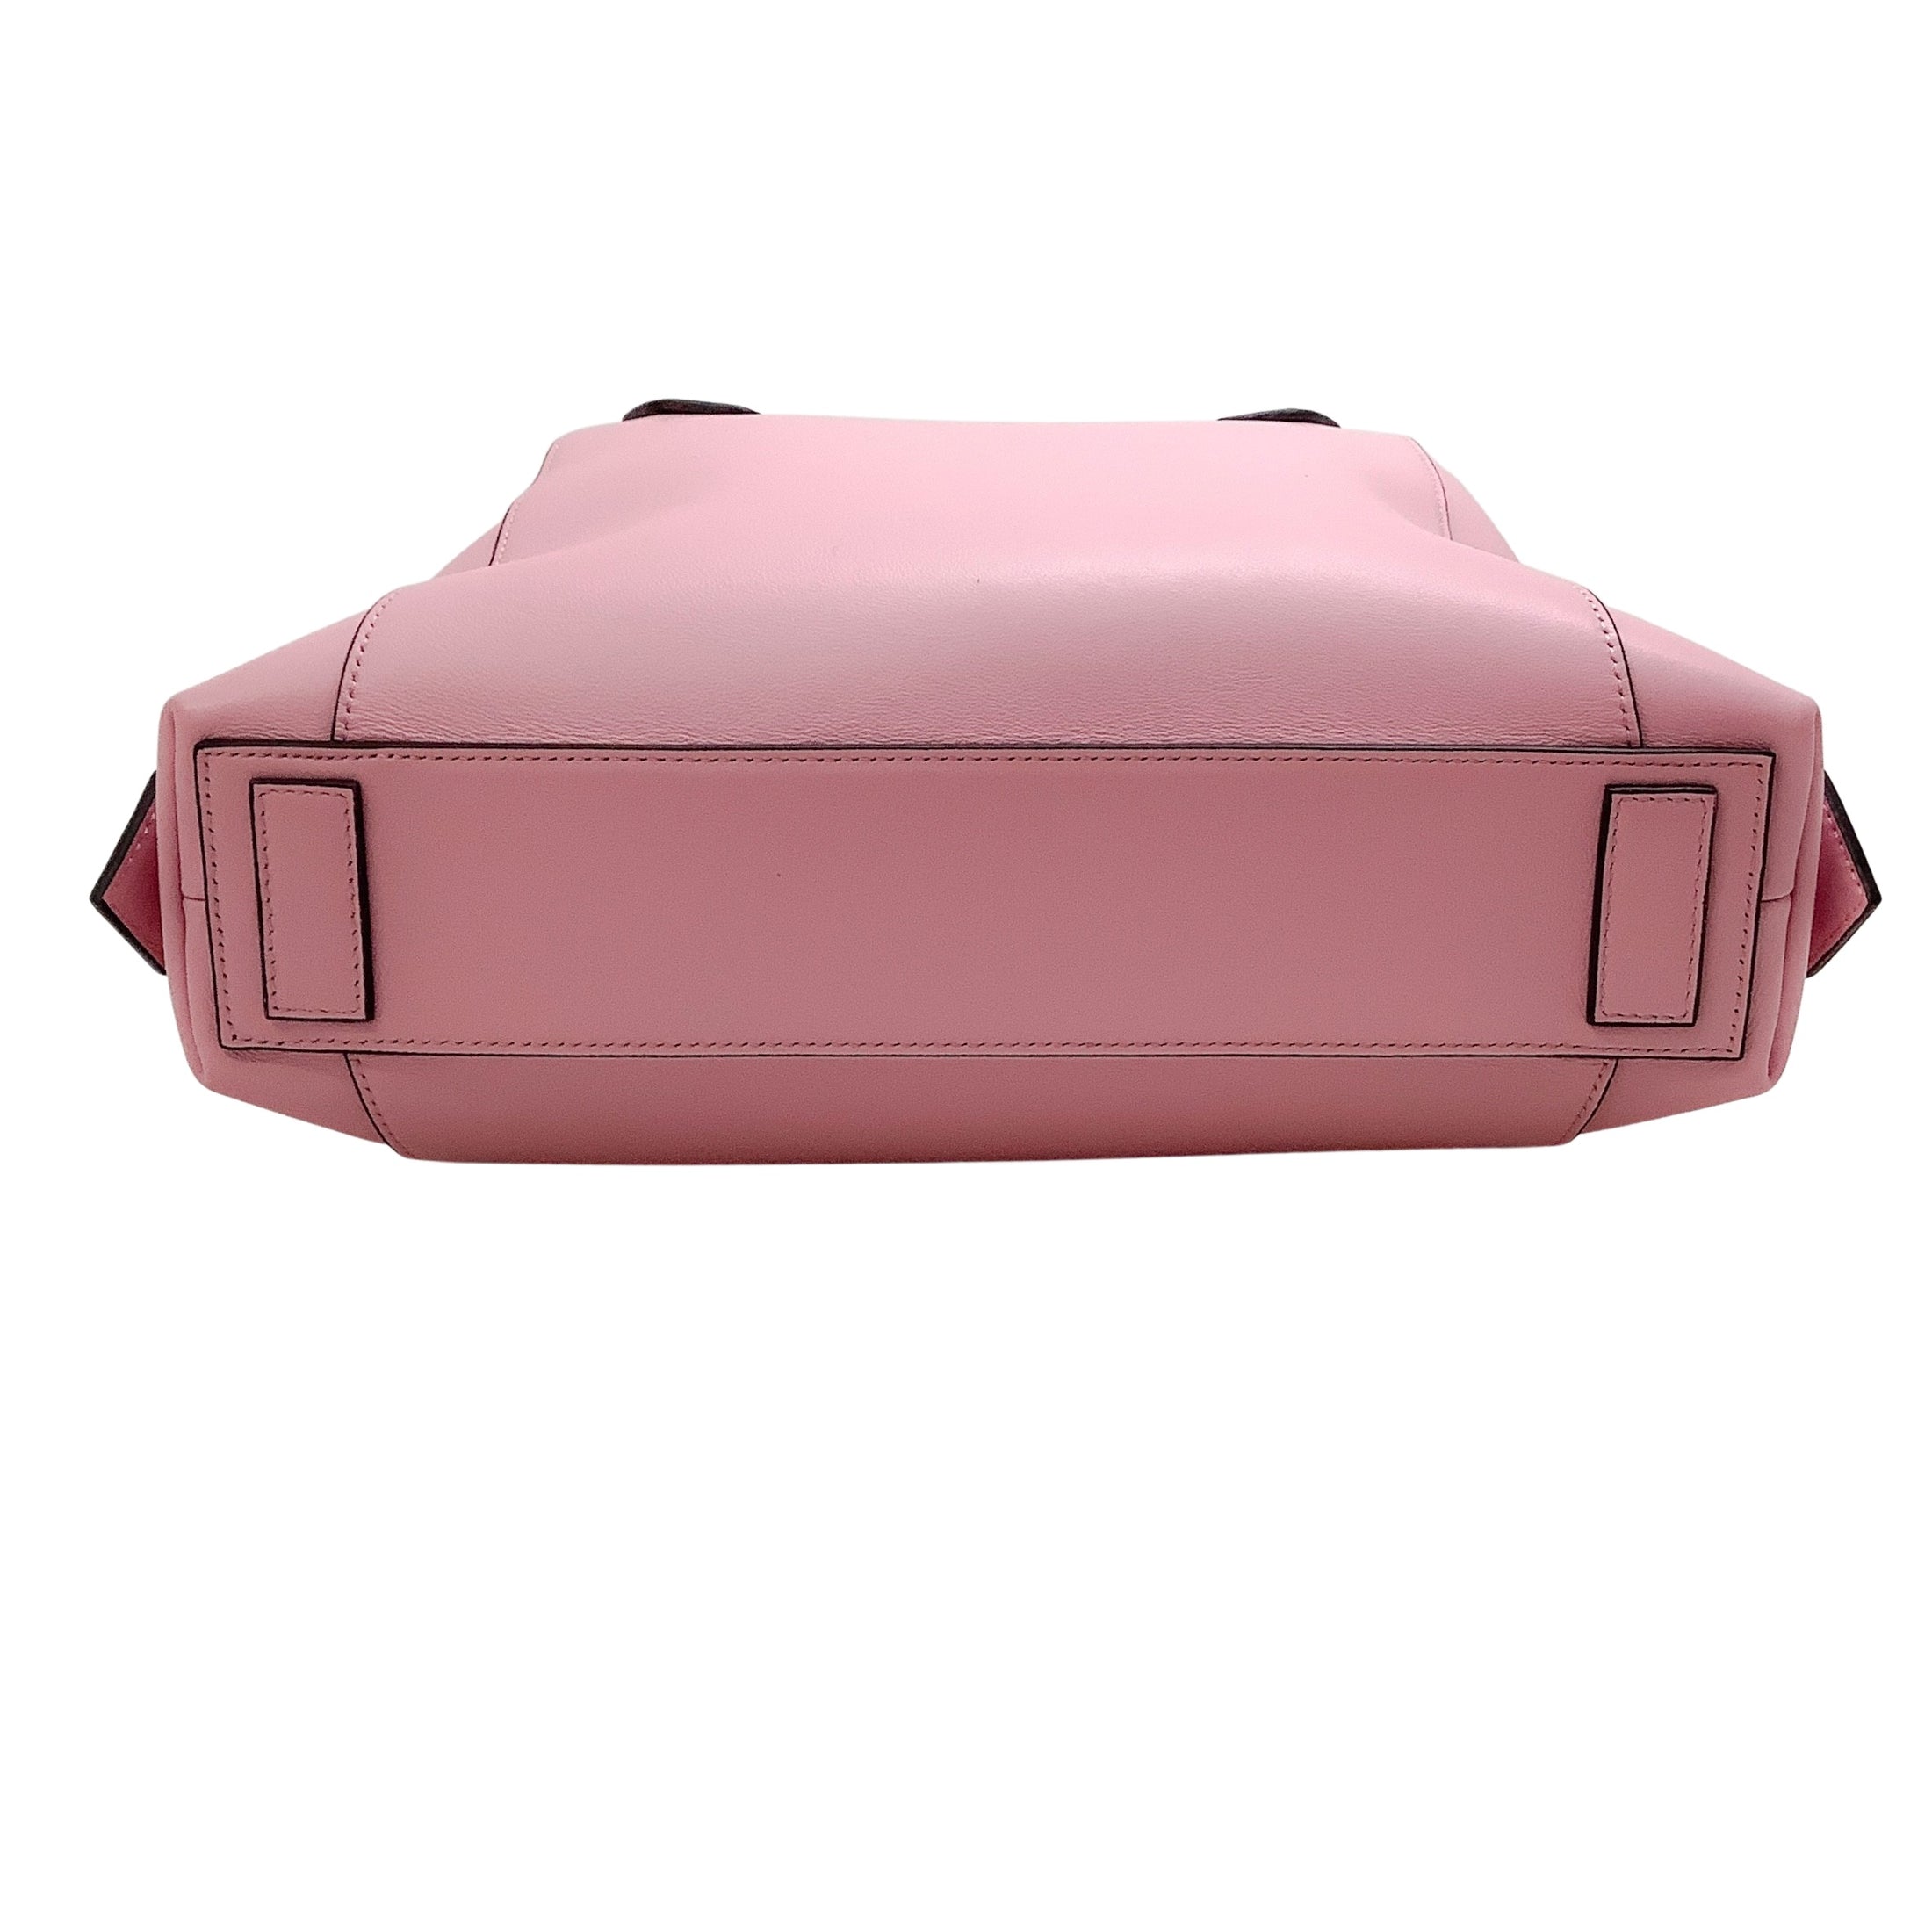 Givenchy Soft Pink Small Antigona Satchel